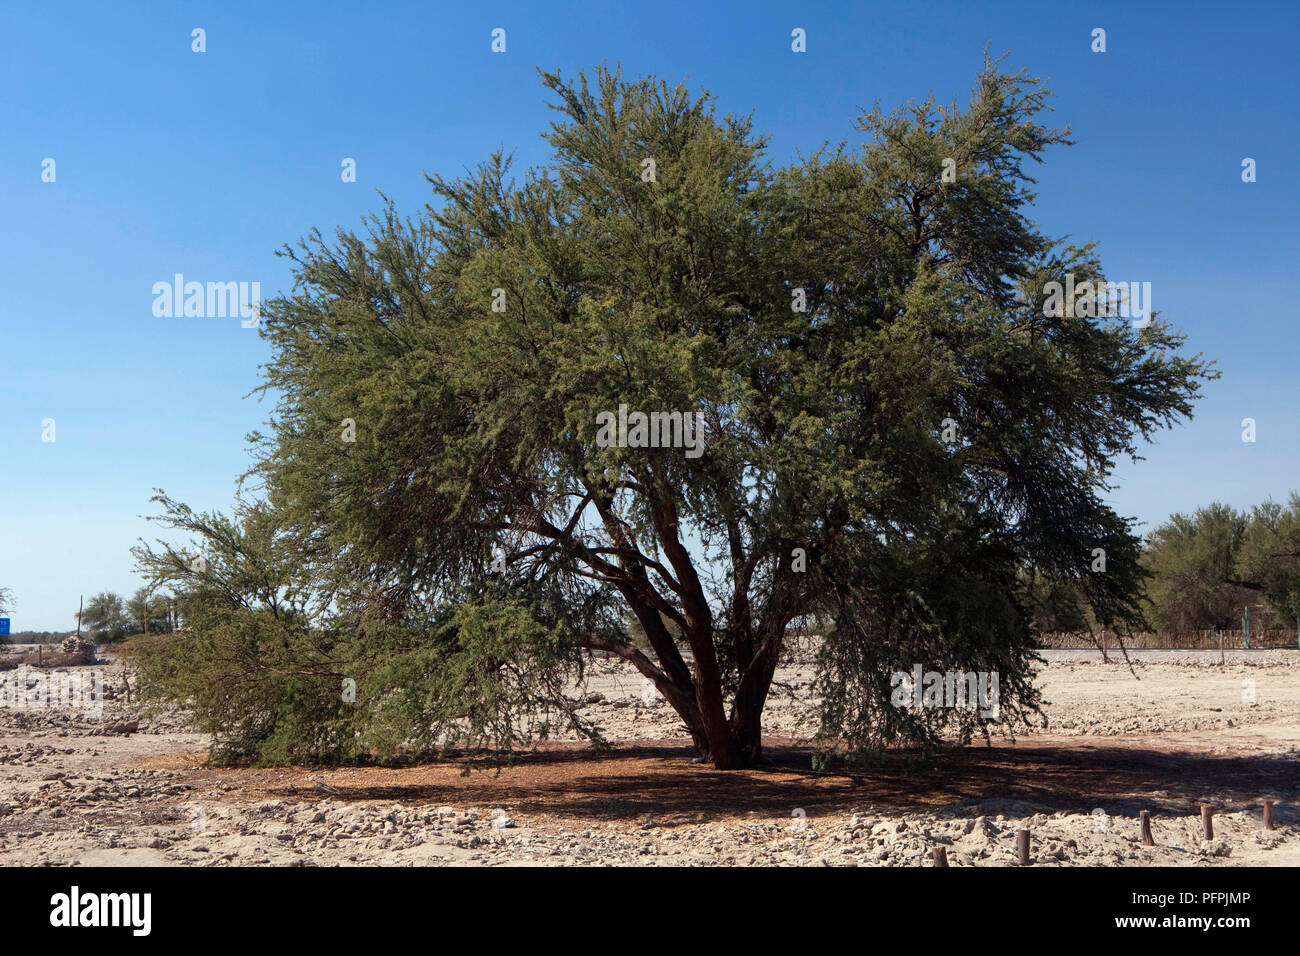 Chile, Tarapaca region, Pampa del Tamarugal National Reserve, Prosopis tamarugo (taramugo) tree Stock Photo